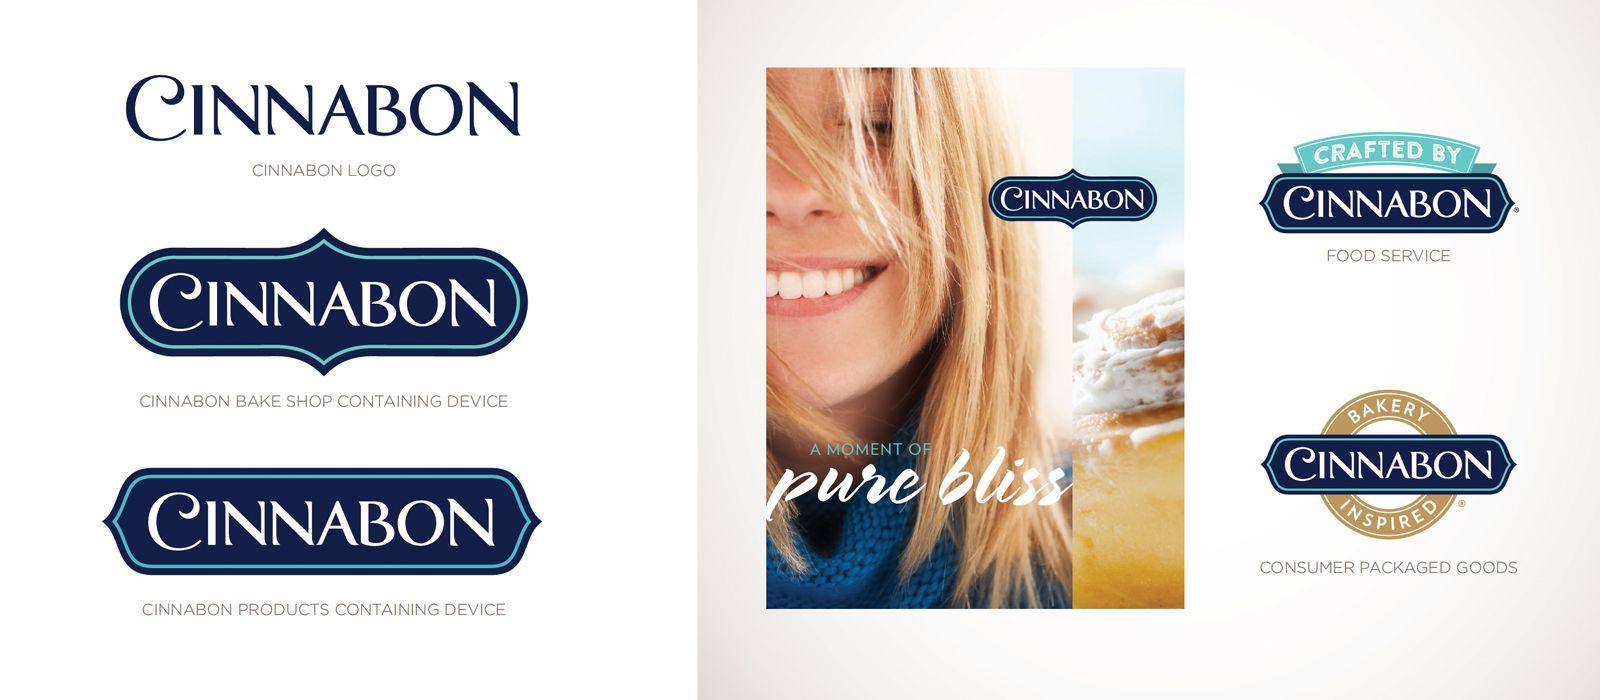 Cinnabon Logo - Sterling-Rice Group - Cinnabon